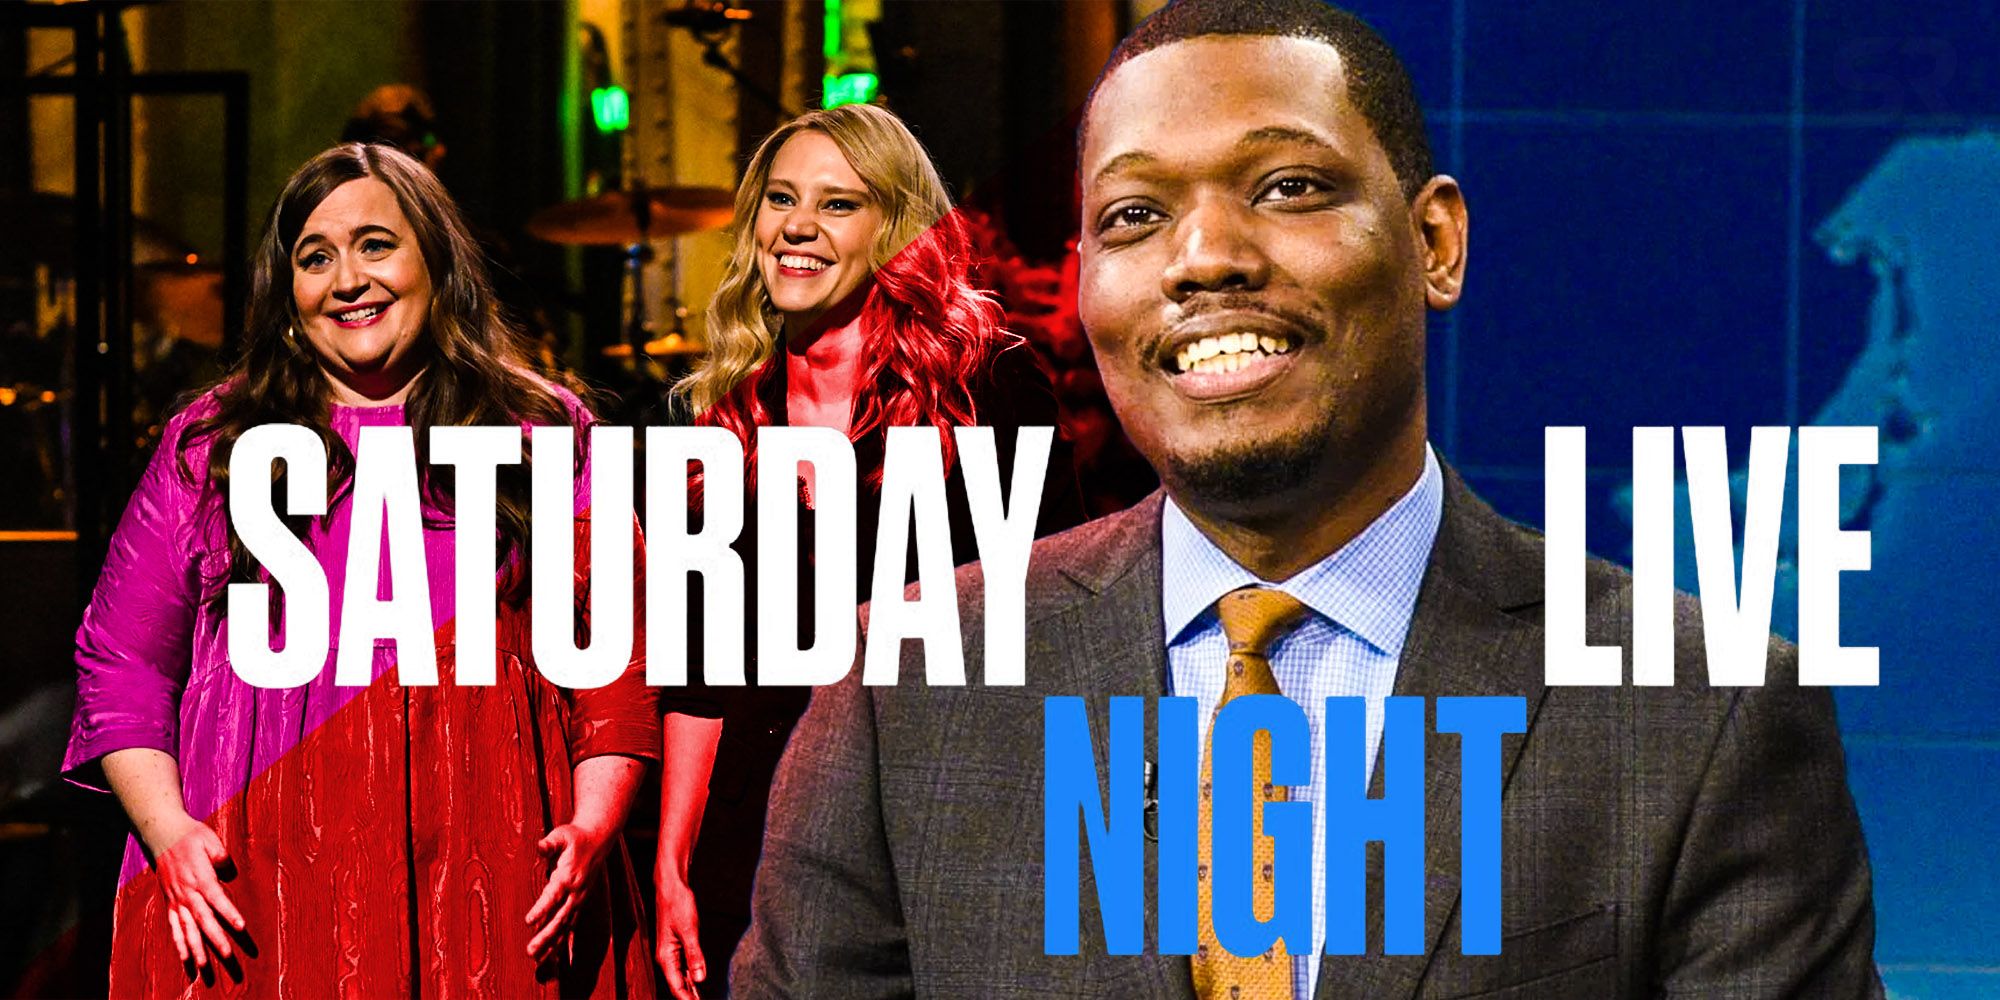 Saturday night live SNL season 47